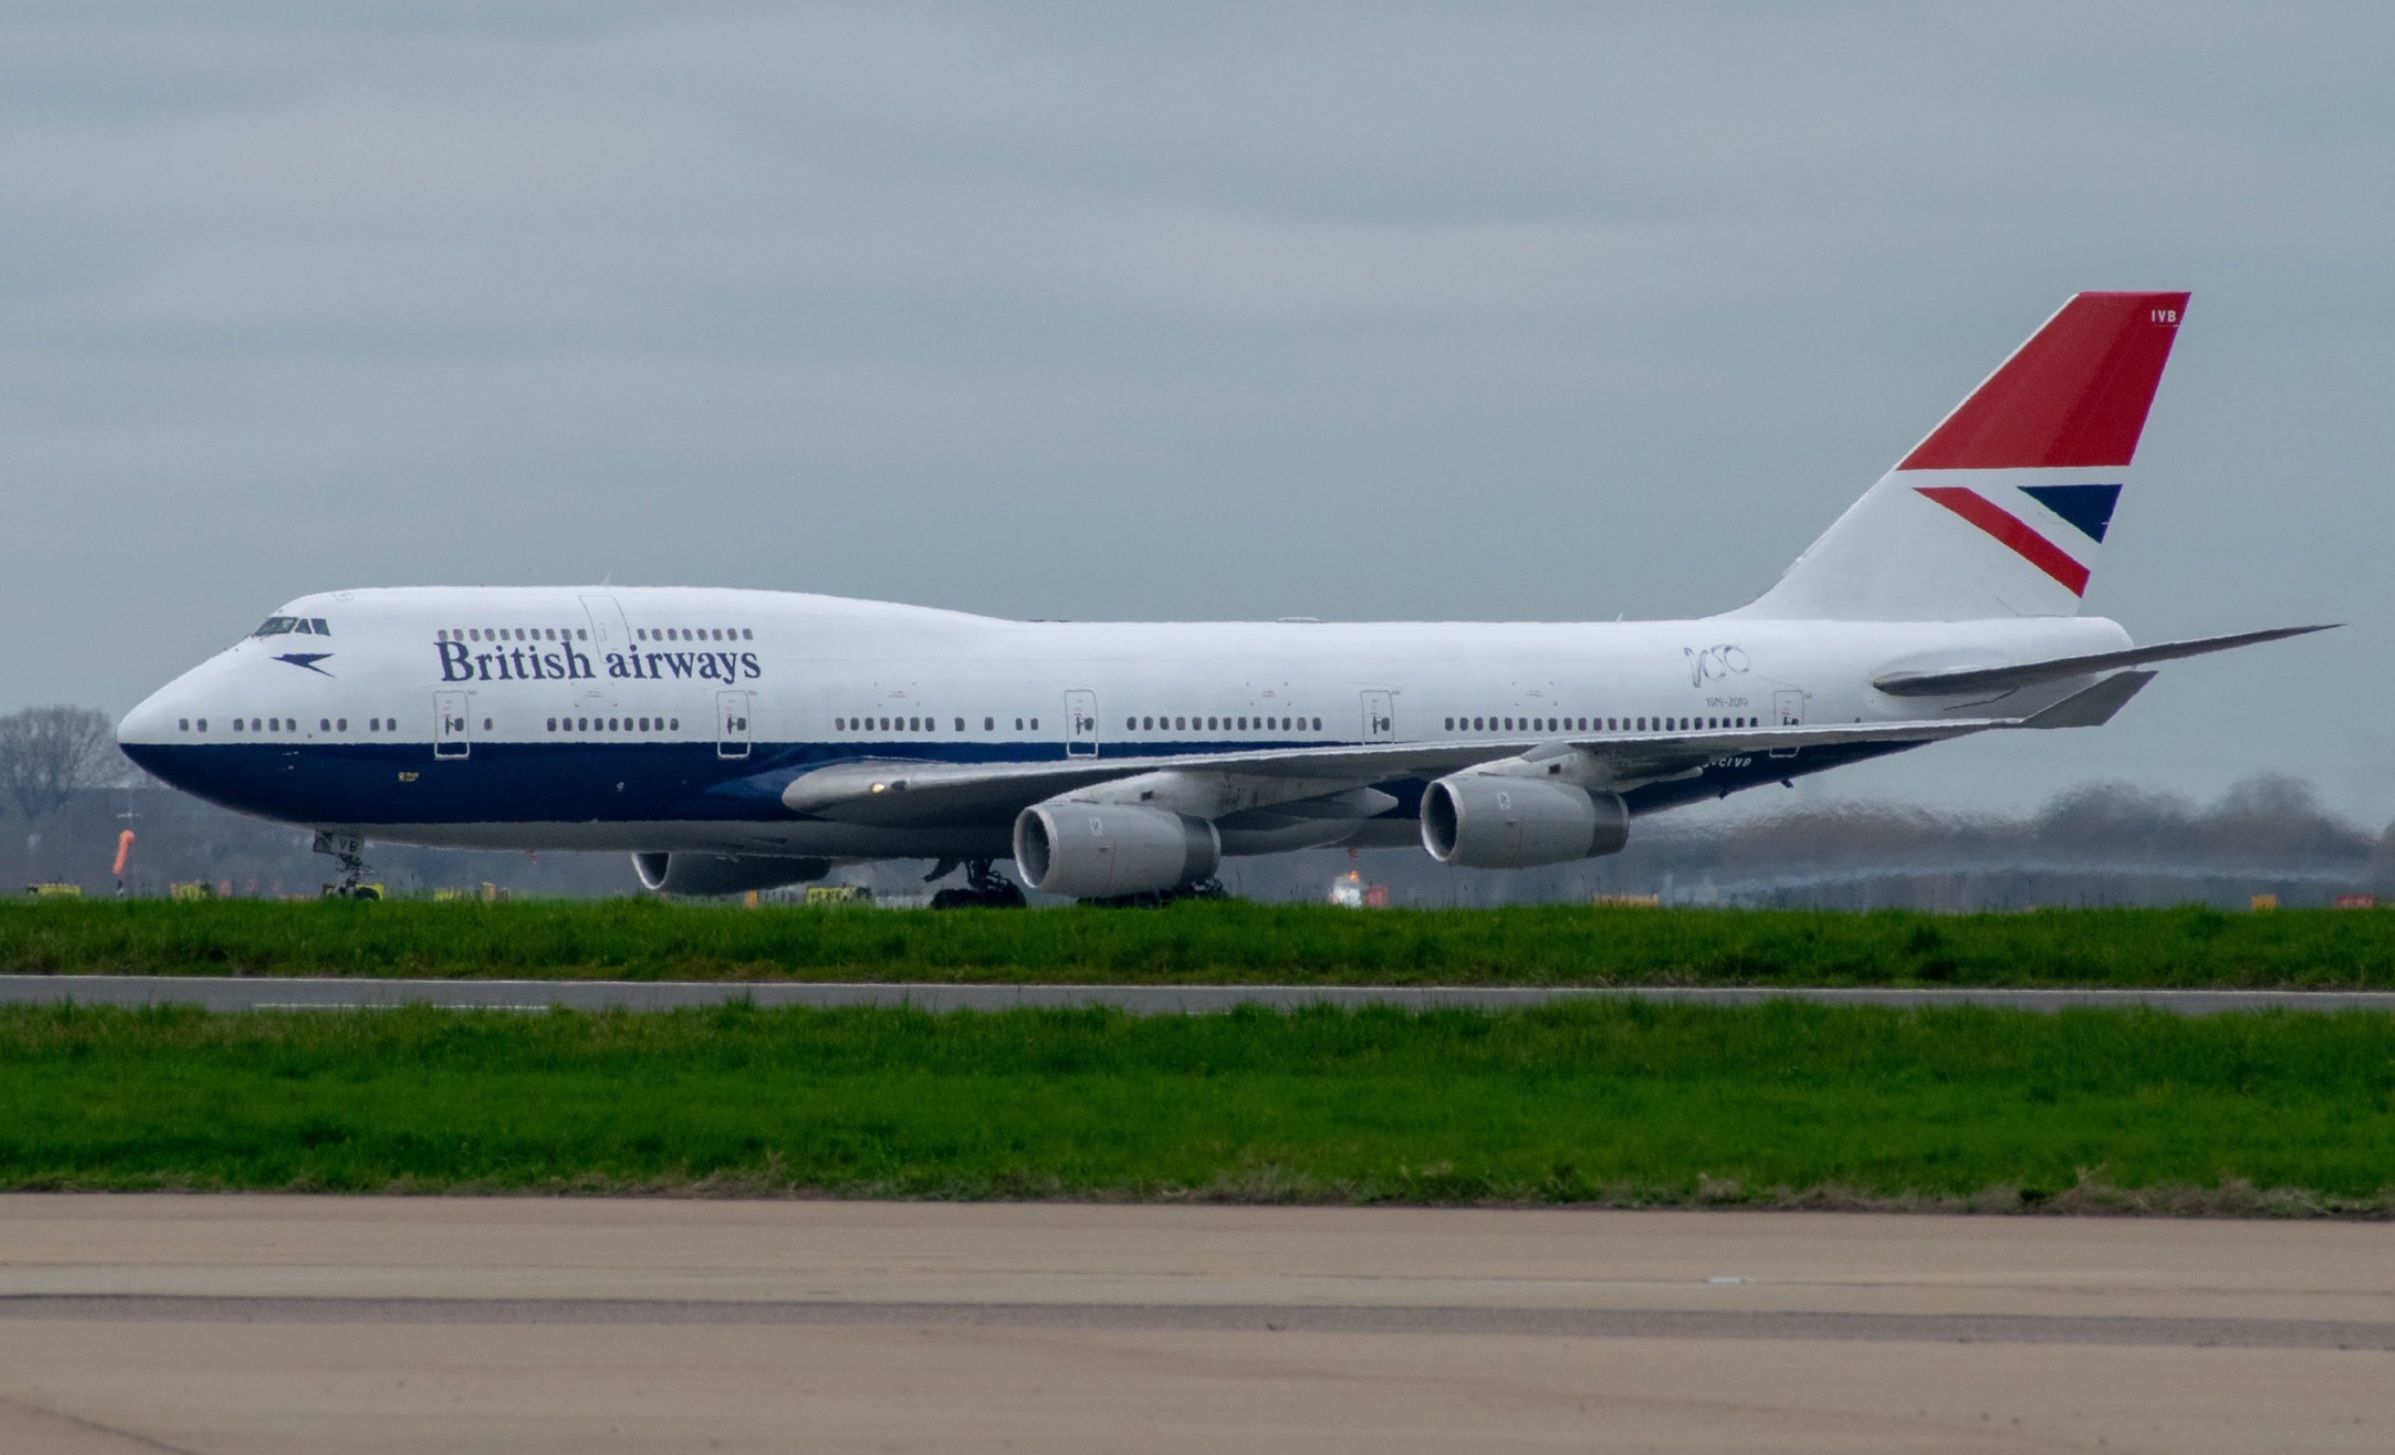 A British Airways Boeing 747-400 on an airport apron.